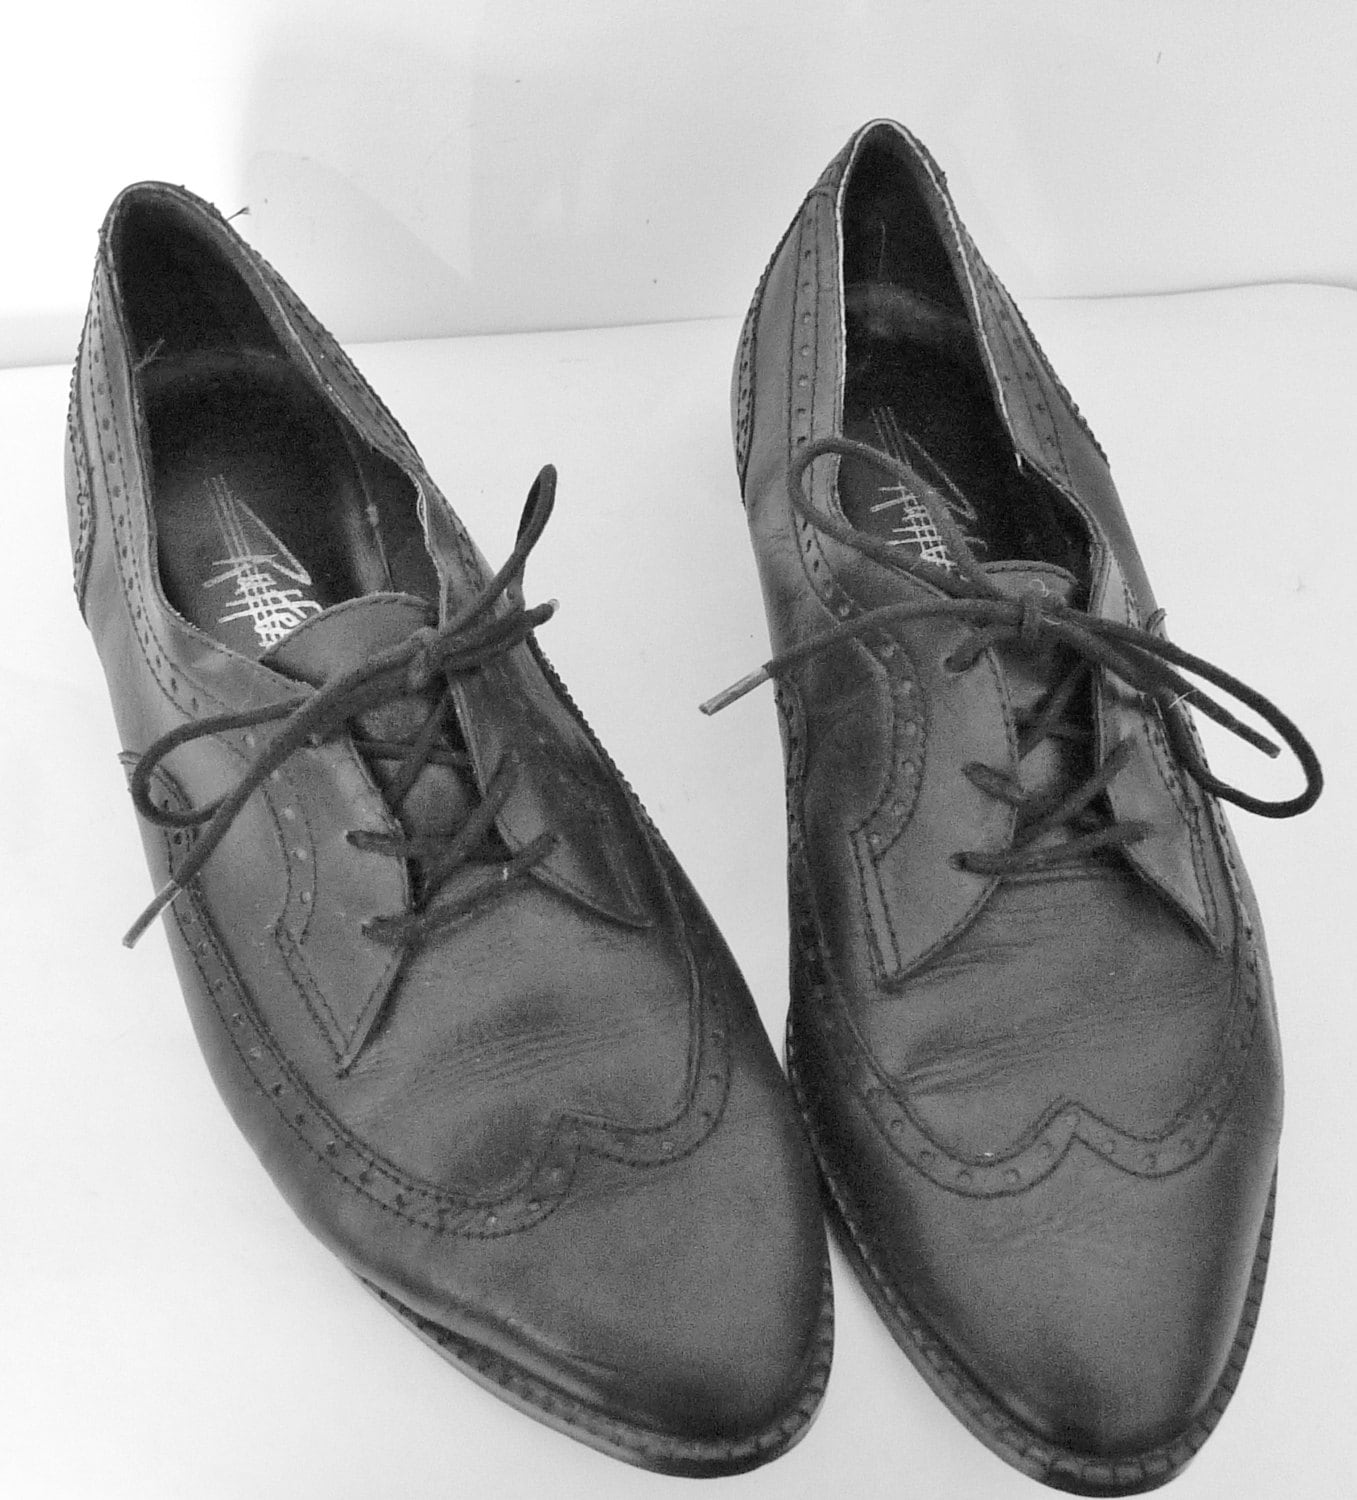 Vintage 80s Zoot Suit Black Oxford Brogues. Wingtip Shoes for